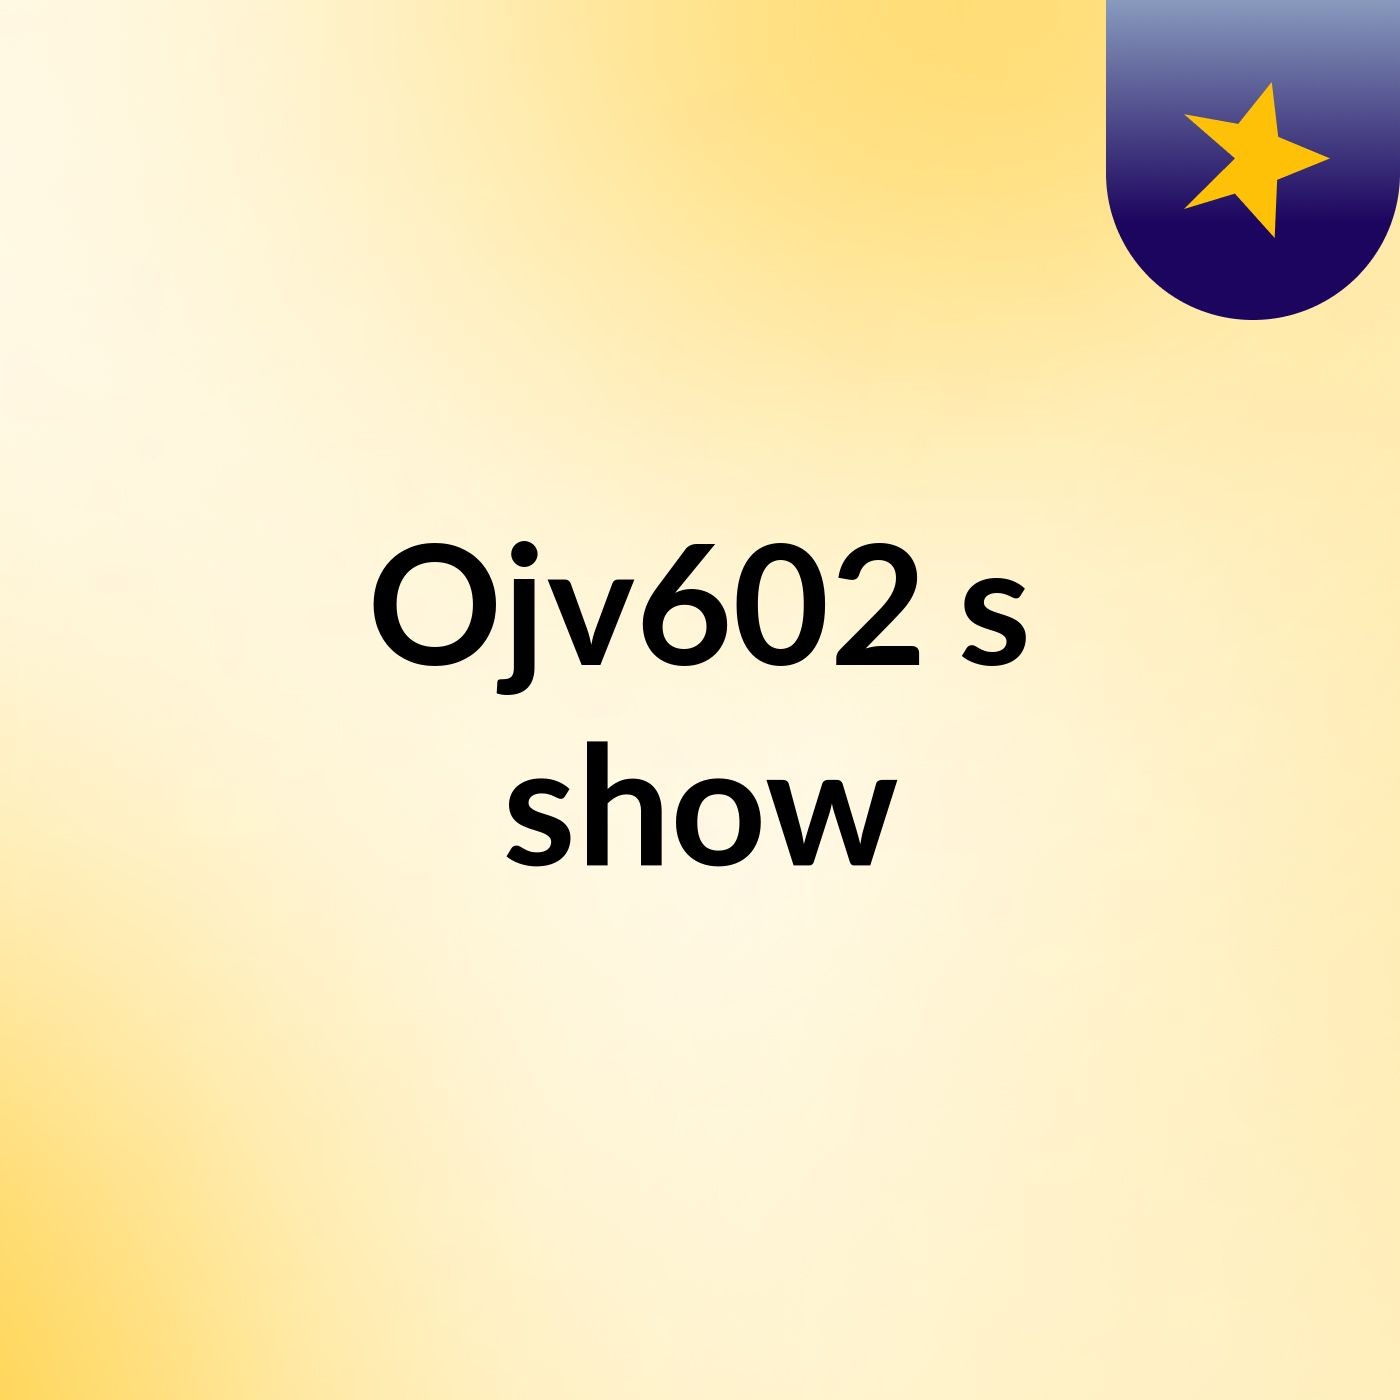 Ojv602's show